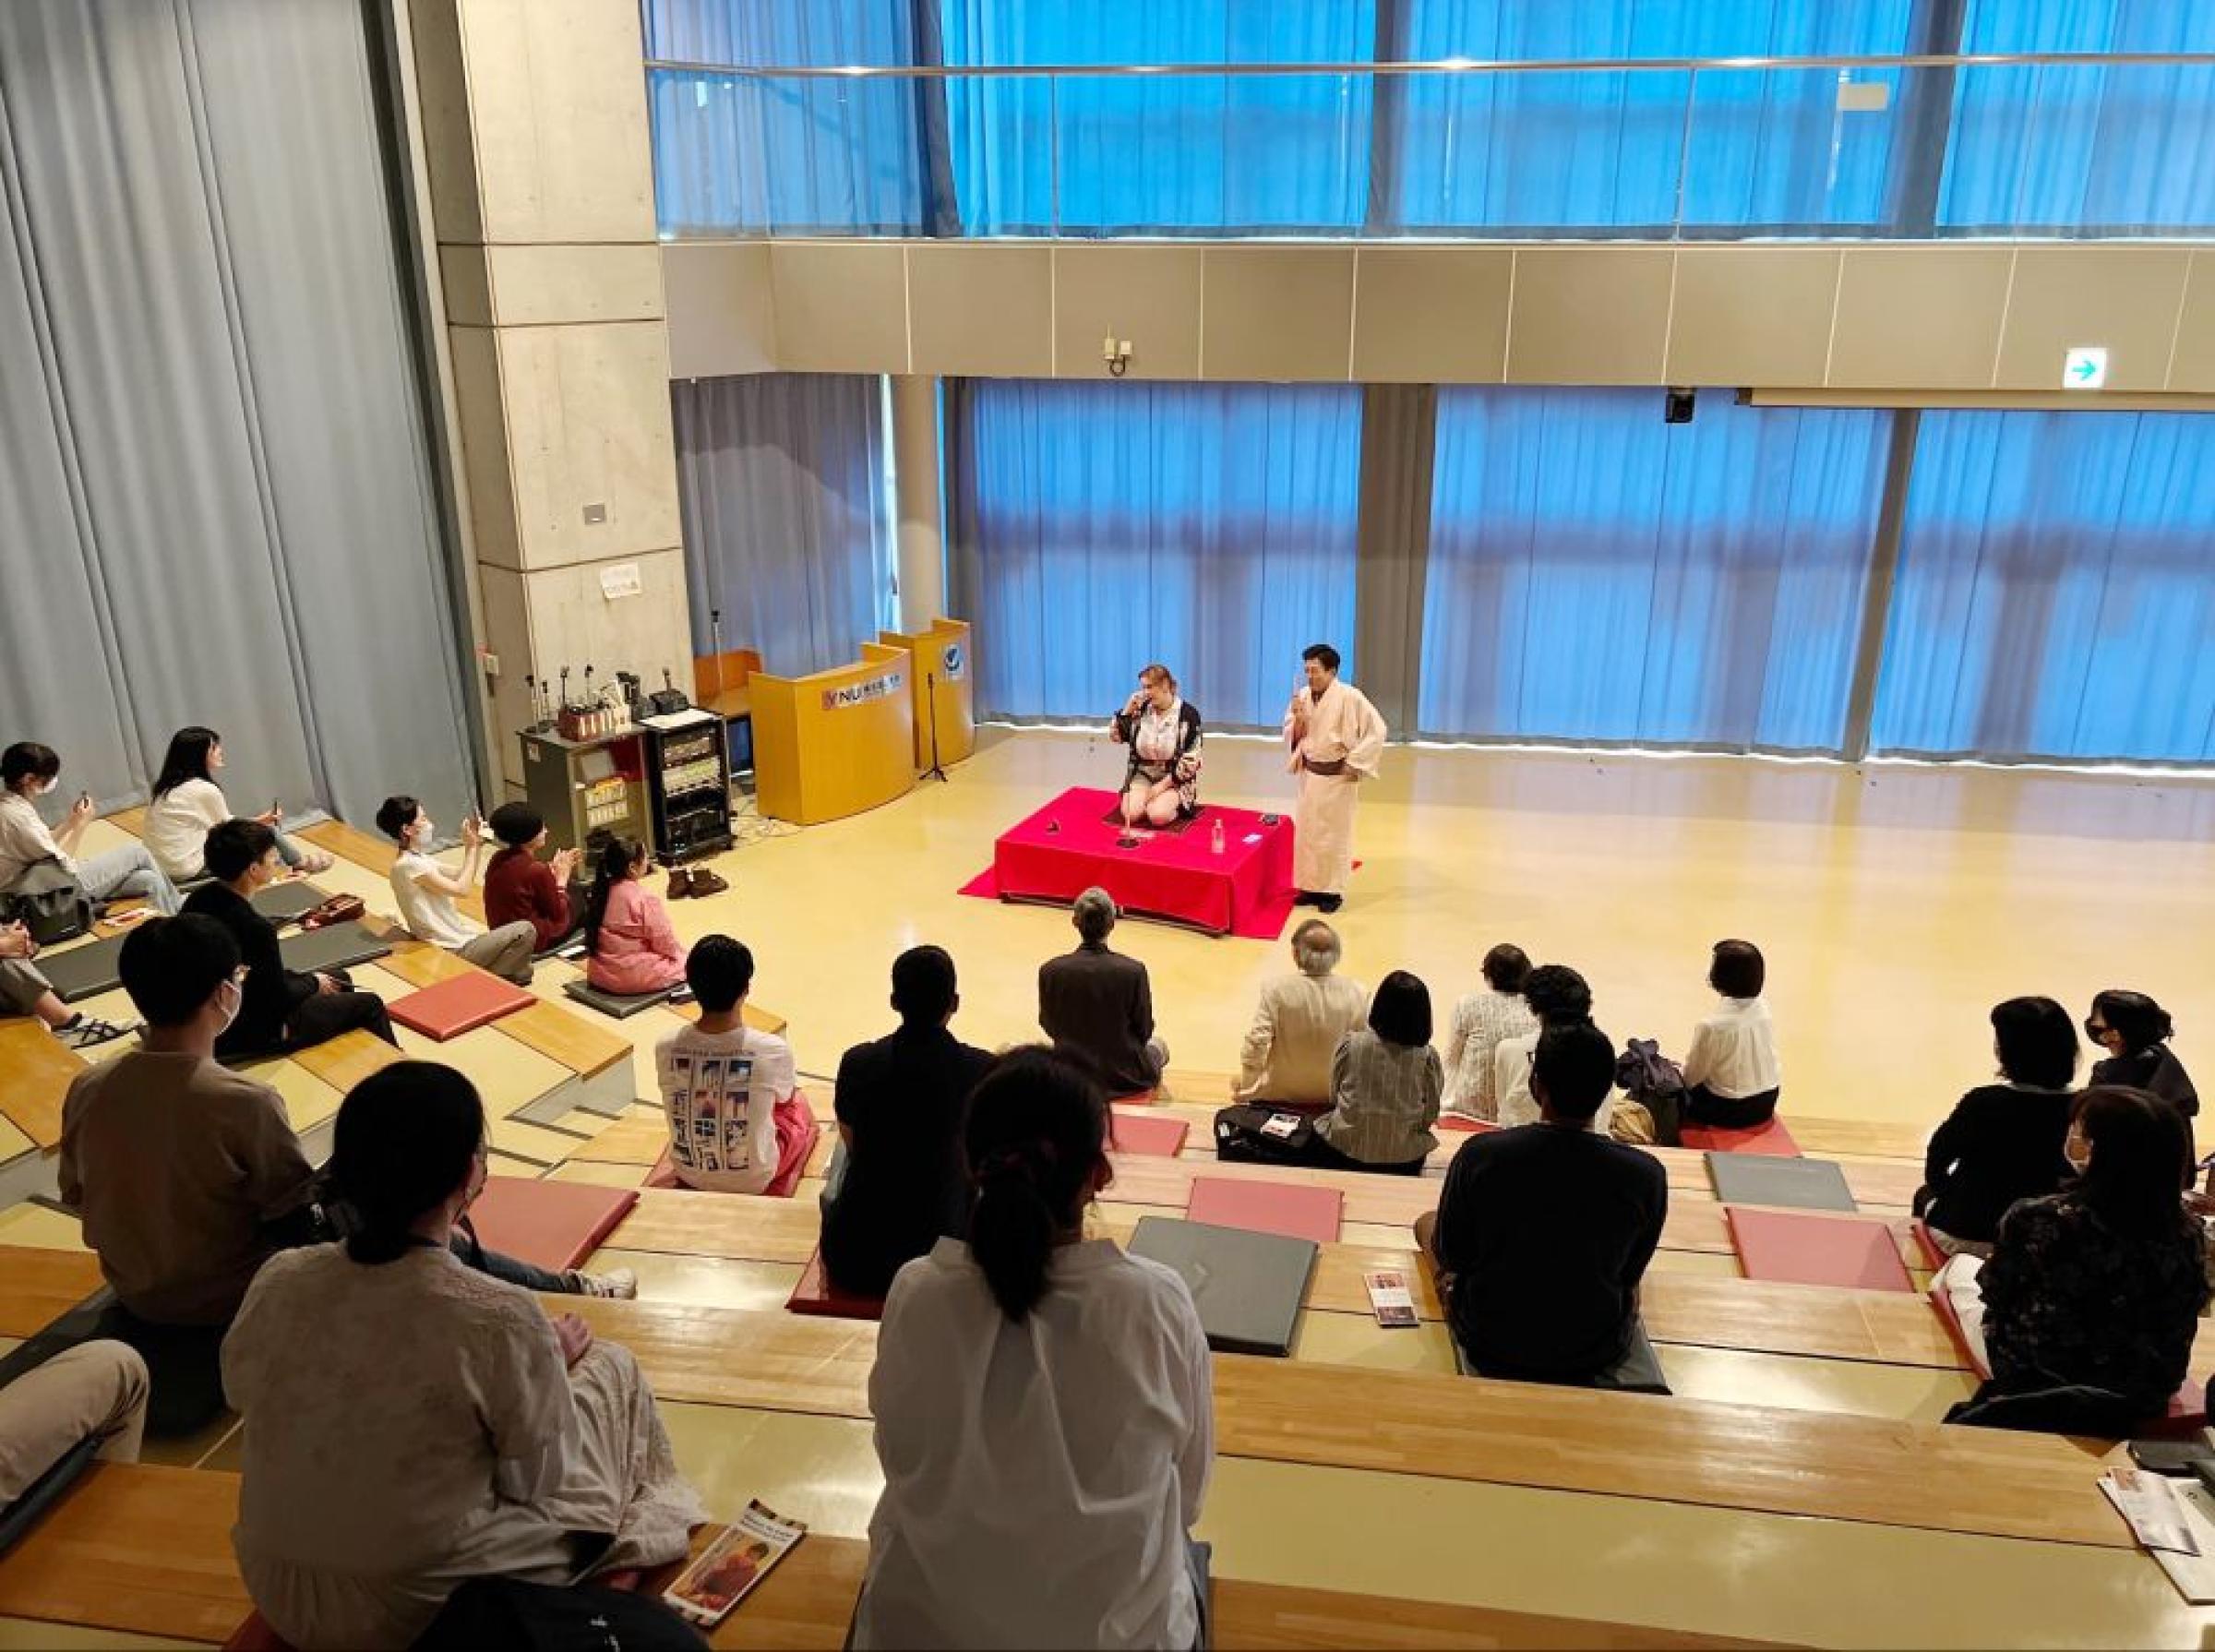 International student performing a rakugo as an audience looks on